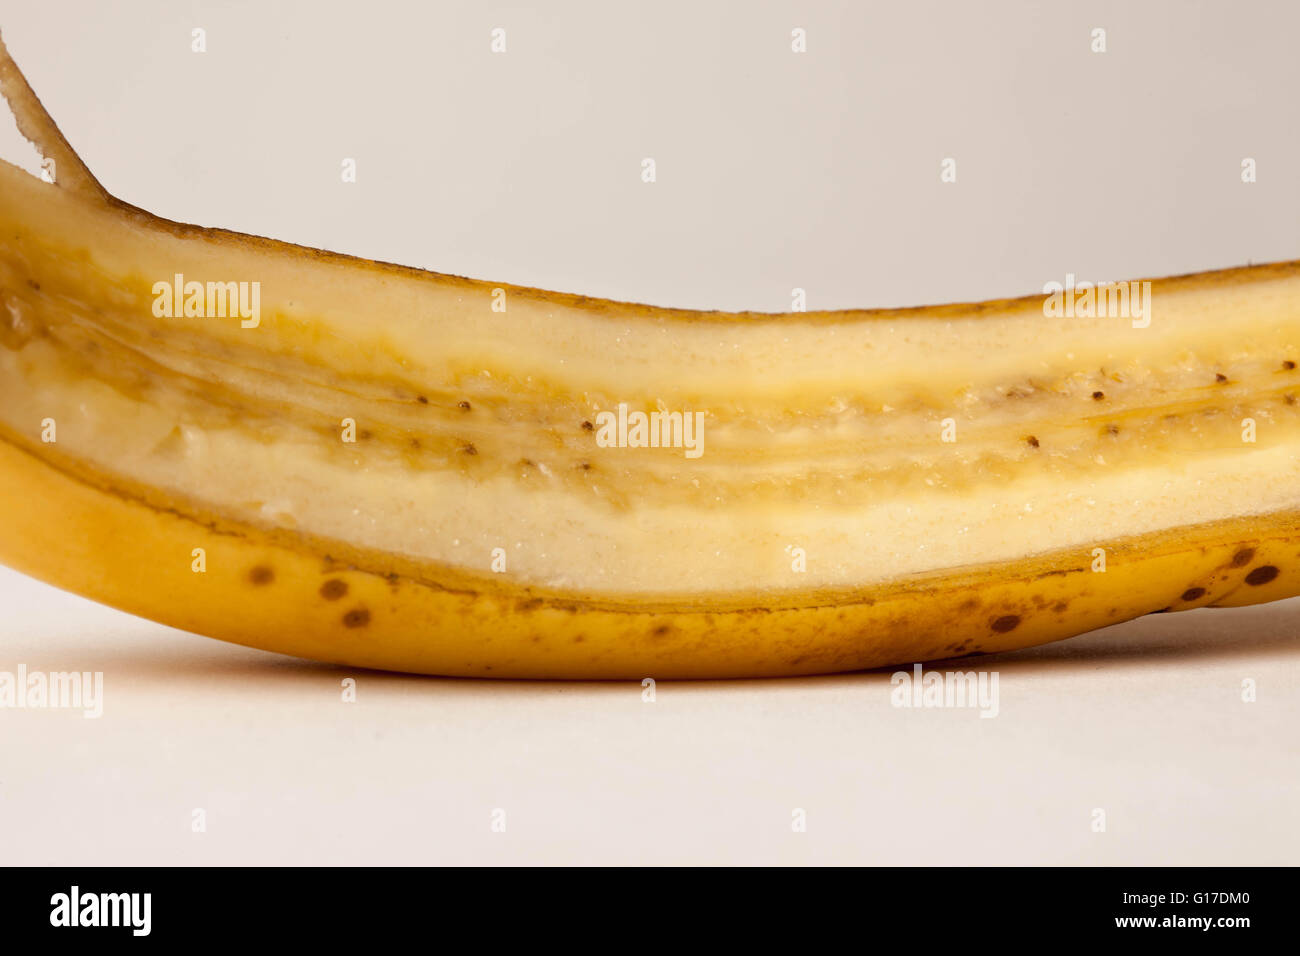 Half a banana Stock Photo